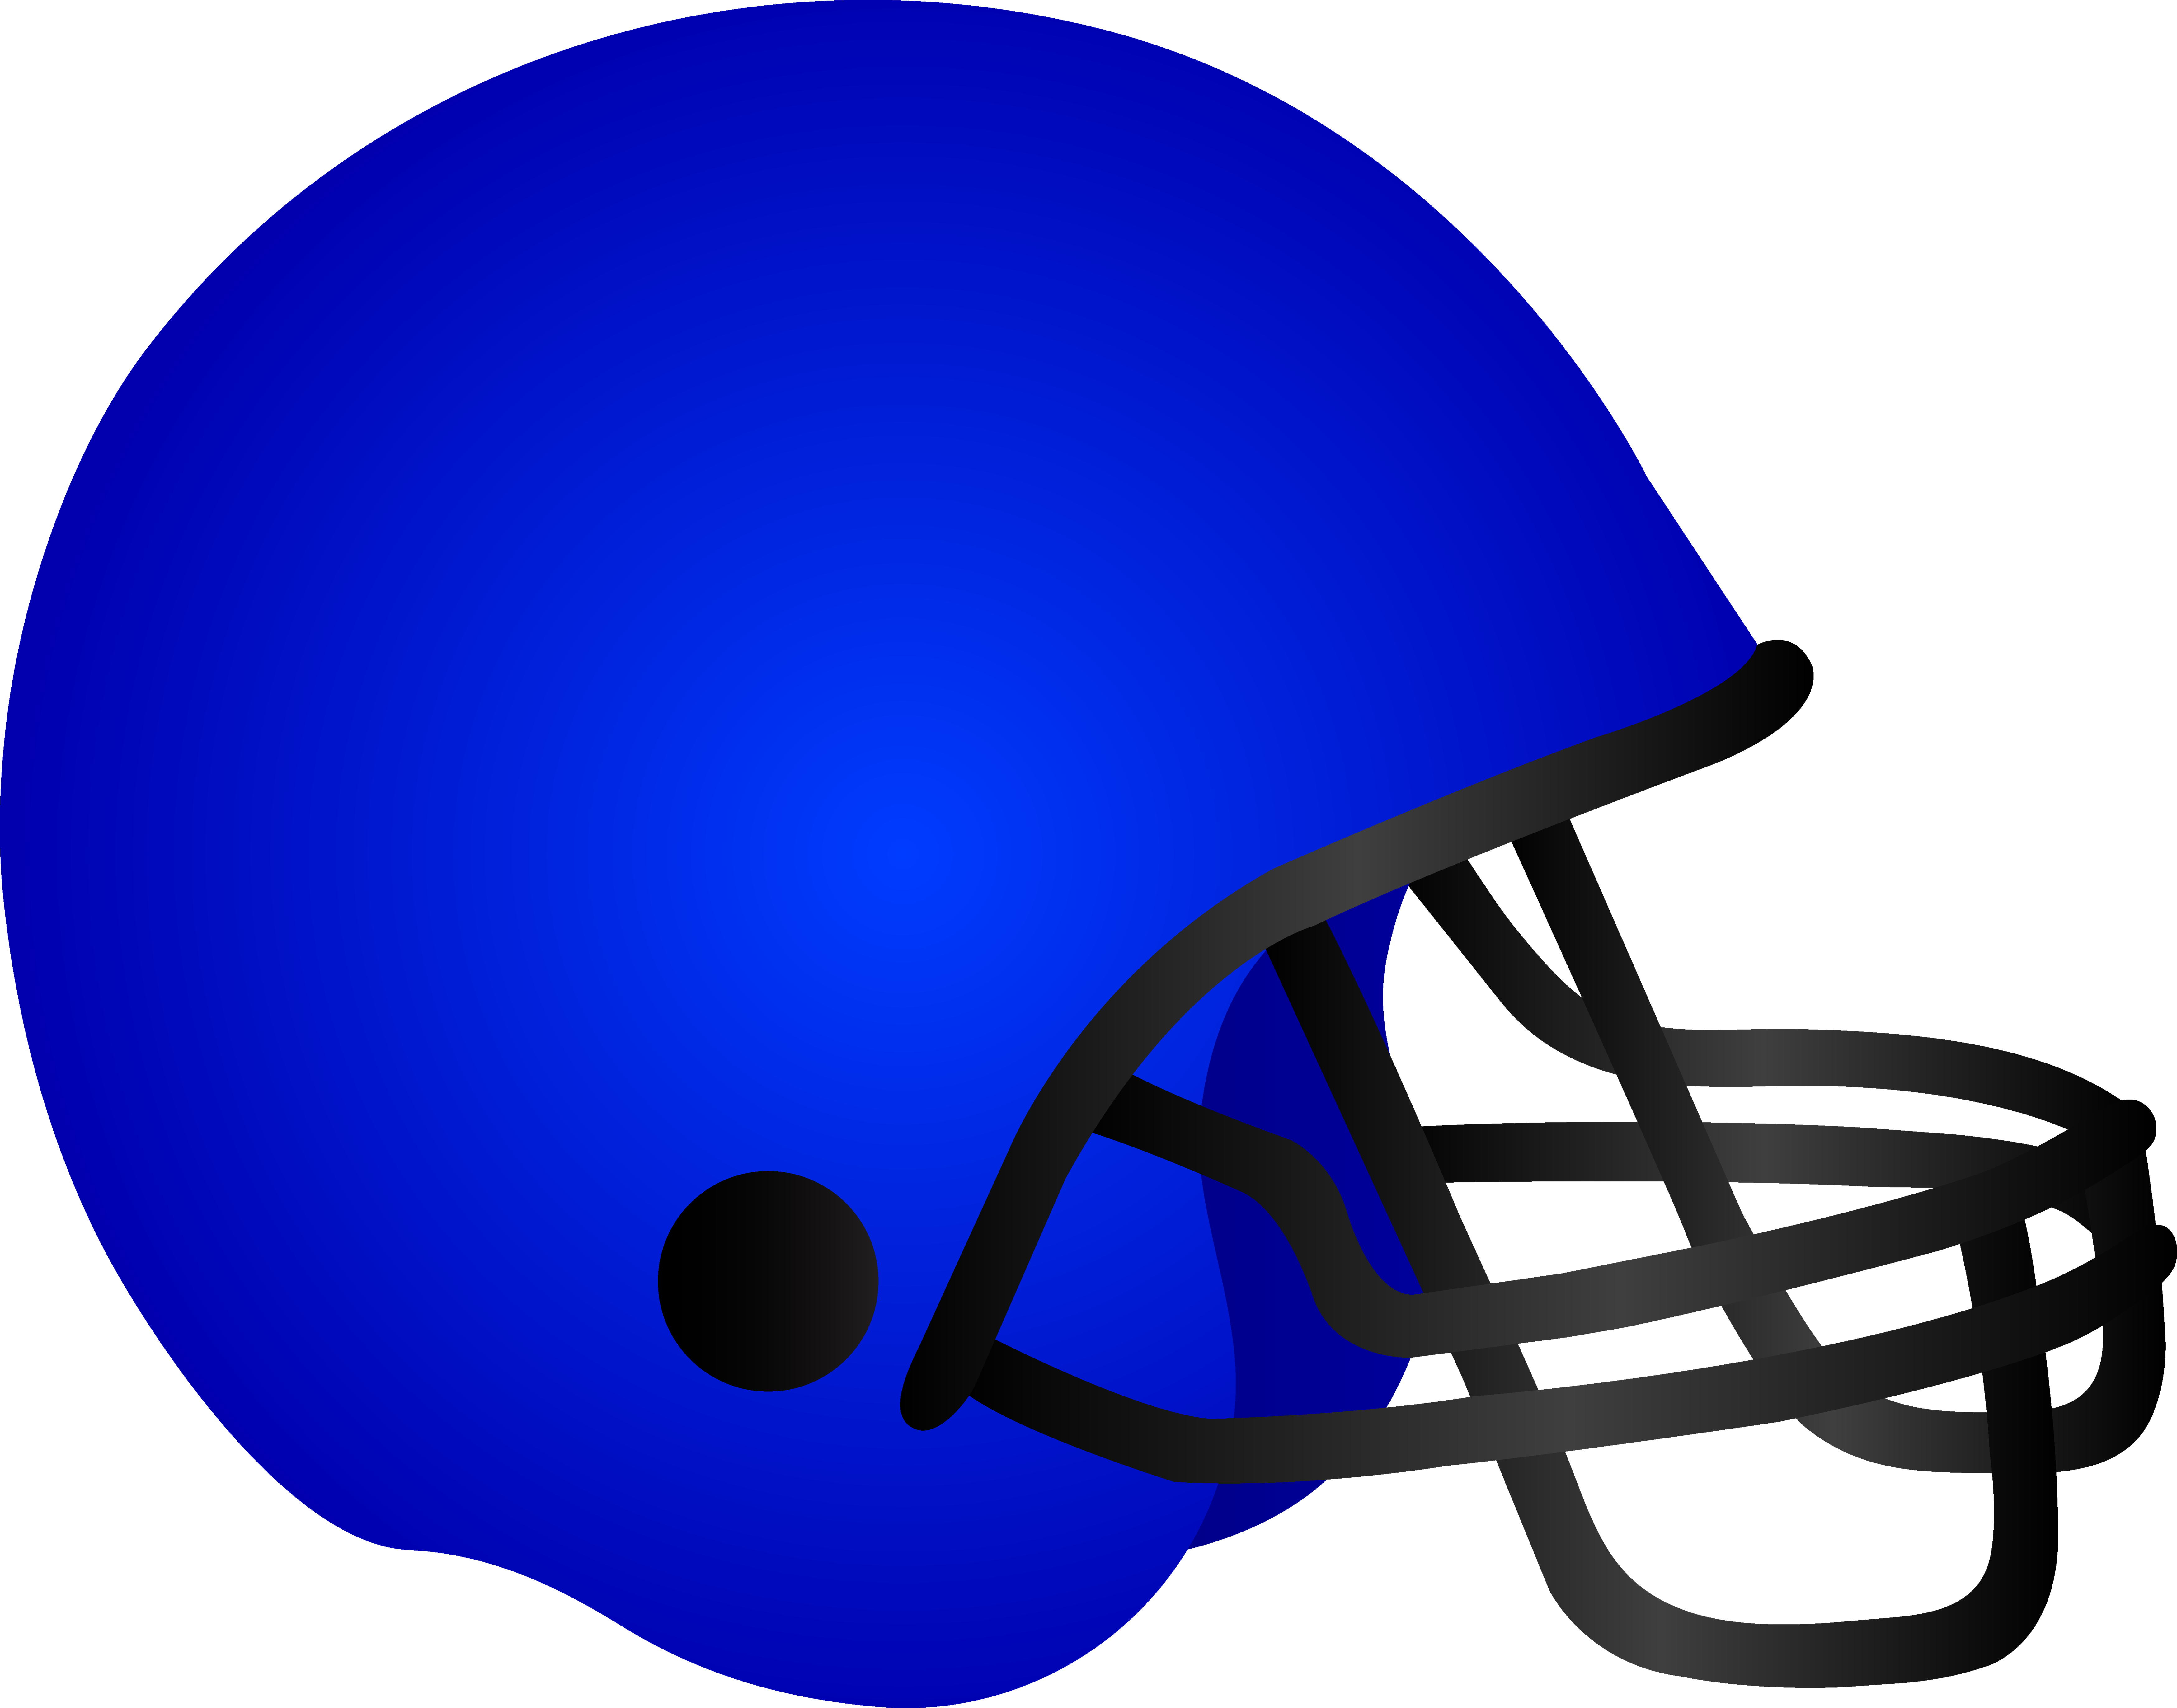 Helmet Clip Art - Tumundografico